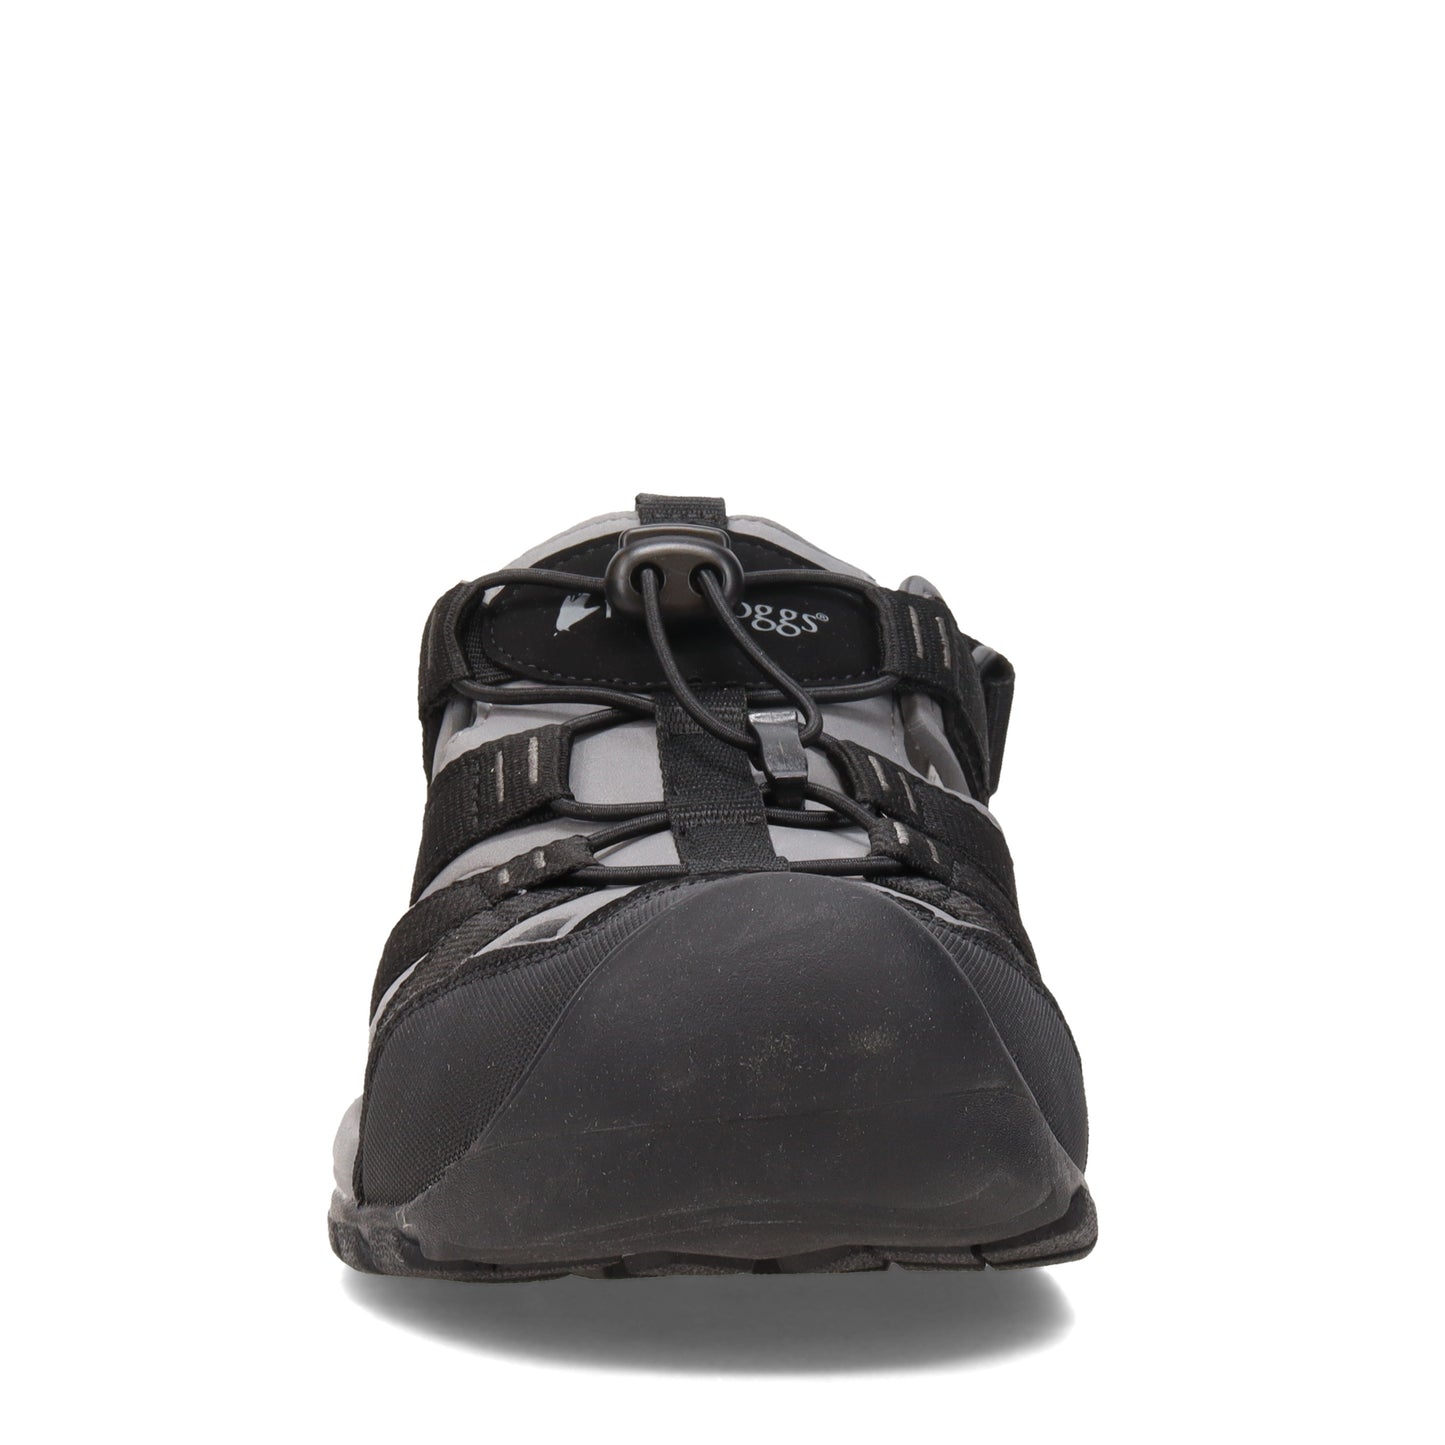 Peltz Shoes  Men's Frogg Toggs River Sandal BLACK 4RS011-000